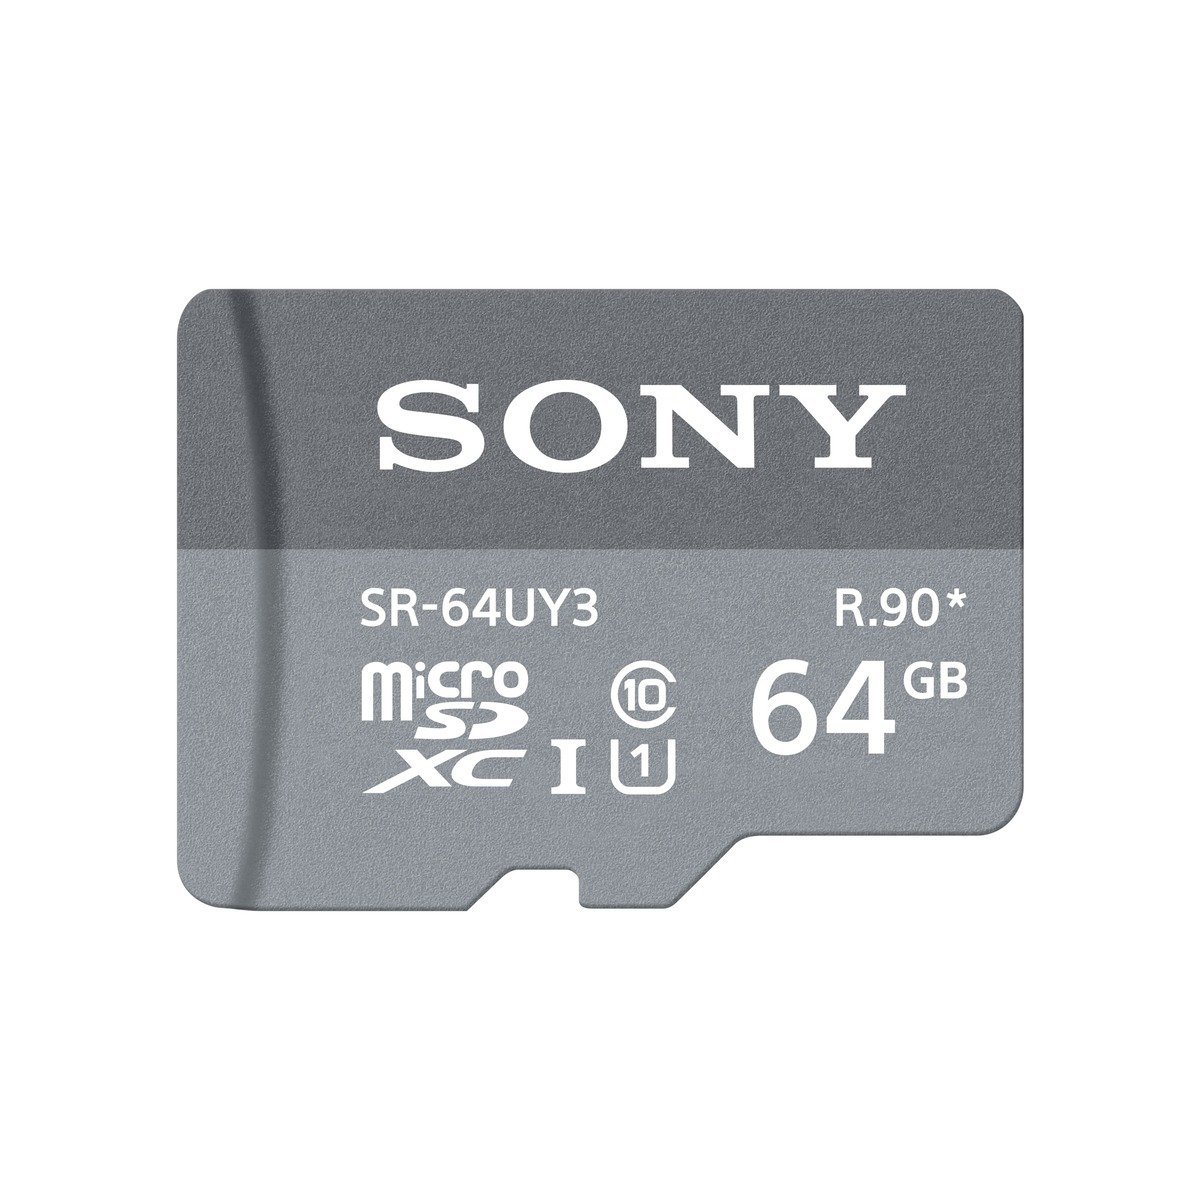 Купить микро 10. Карта памяти Sony MICROSD 32 GB. Микро SD HC 1 Sony. SD 128 Sony. Sony MICROSD class10 UHS-I 128gb SR-g1uy3at SR-g1uy3at.